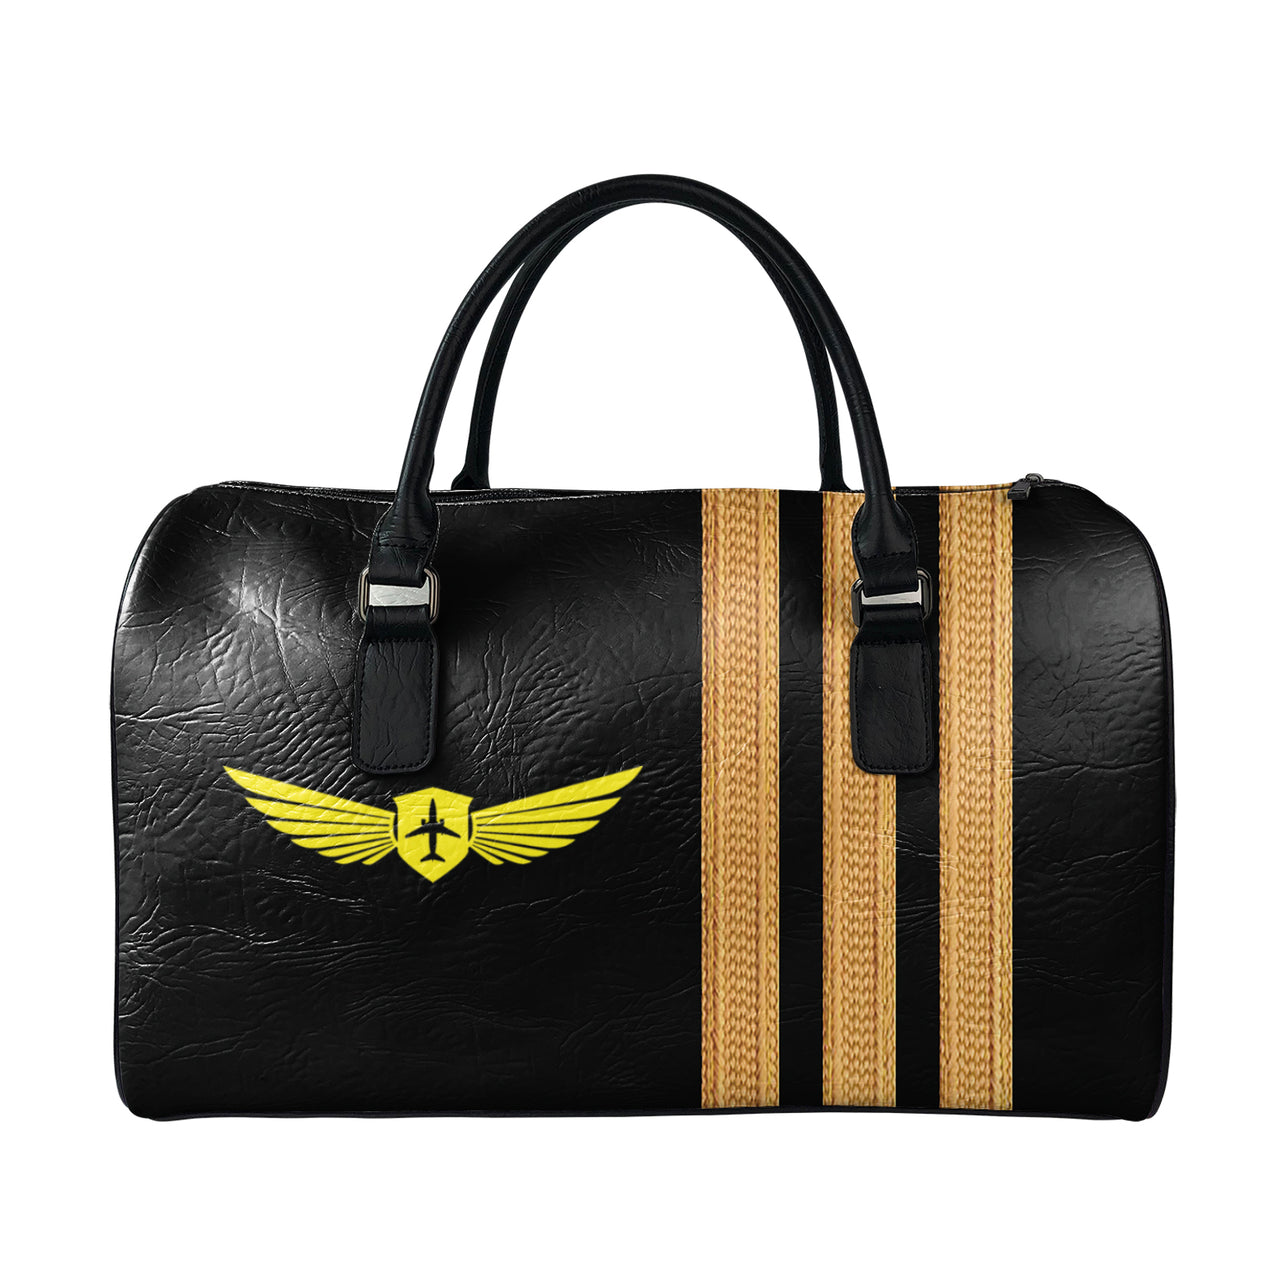 Name & Badge & Golden Special Pilot Epaulettes (4,3,2 Lines) Designed Leather Travel Bag